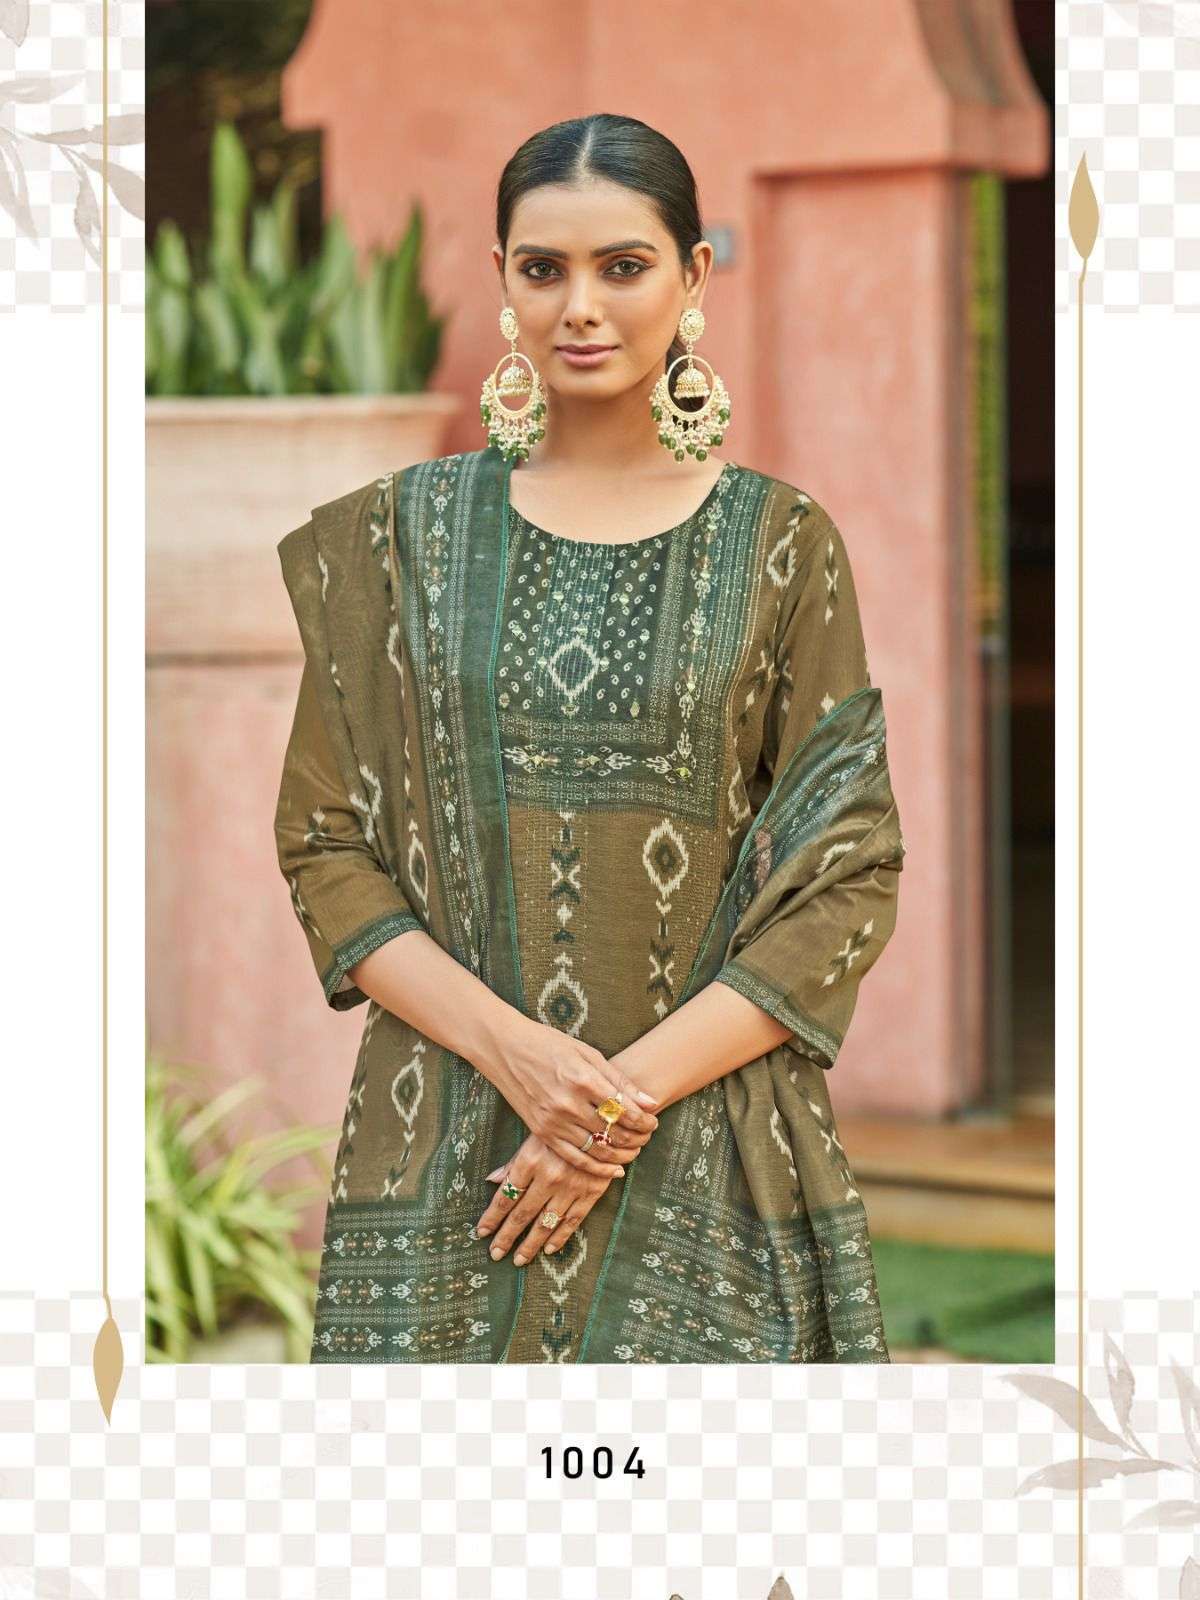 Sai Dhara NxVitara Canopus Series 1001-1004 Viscose Readymade Suit Wholesale Rate In Surat - SaiDharaNx 